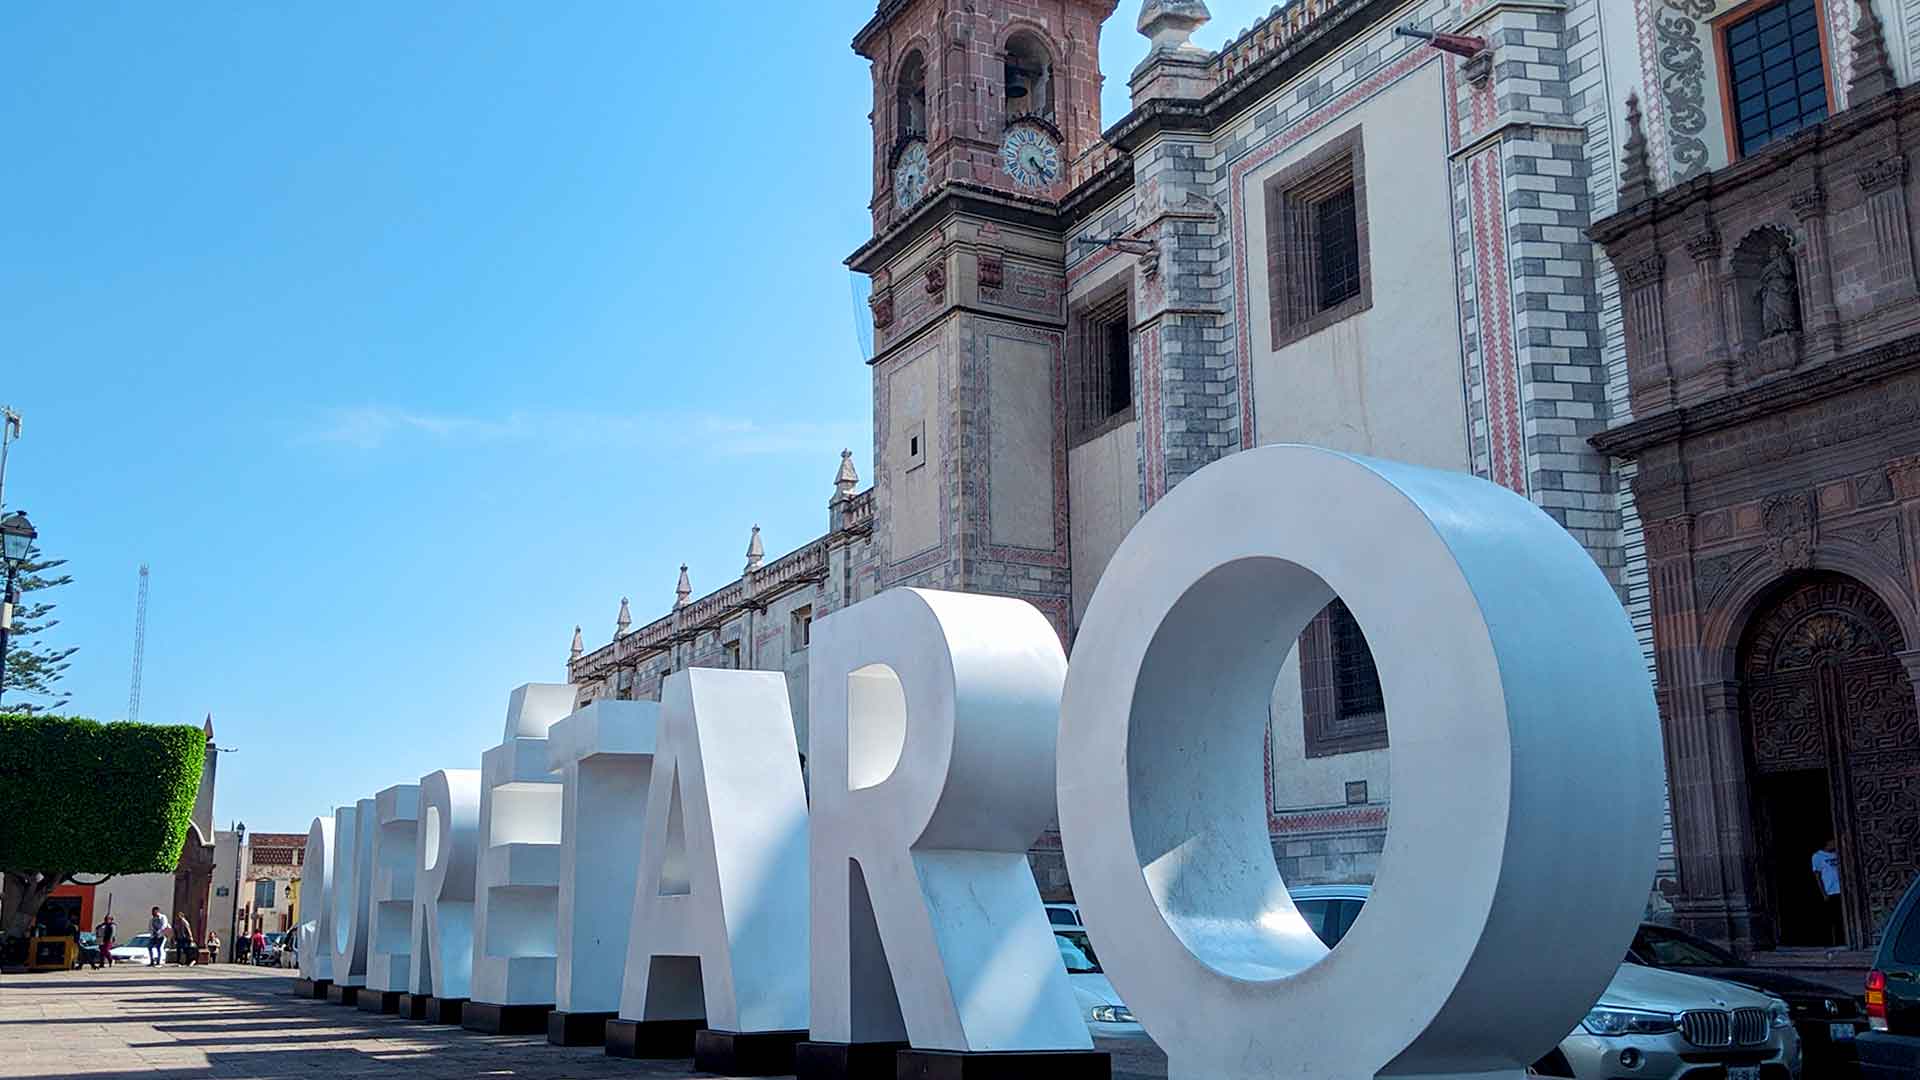 Centro Queretaro Mexico Best Restaurant QTO Big Letters Sign Image